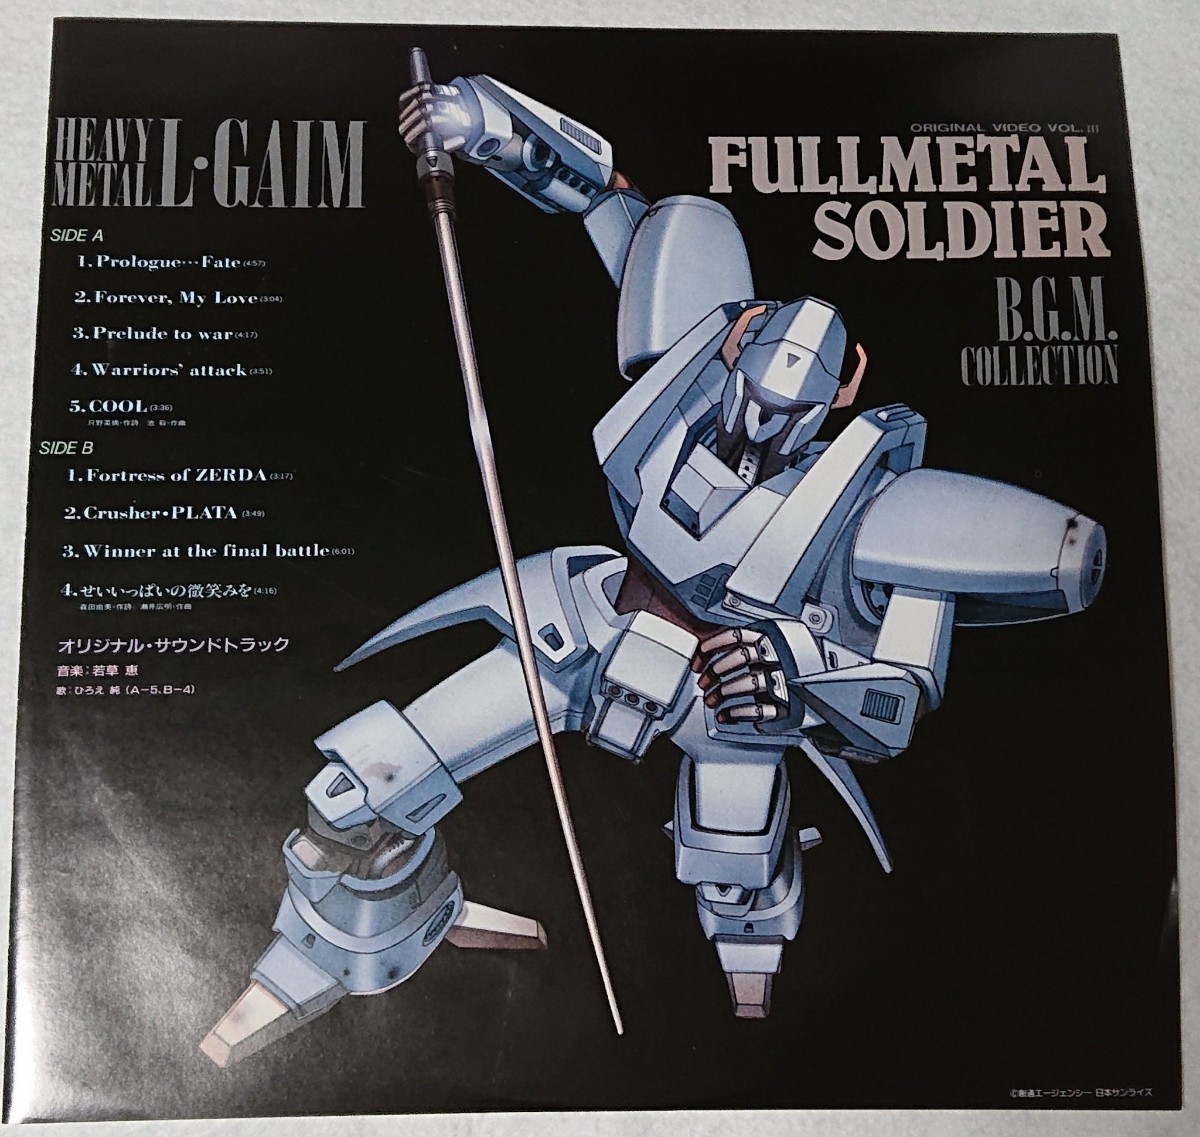 LP запись Heavy Metal L-Gaim FULLMETAL SOLDIER B.G.M.COLLECTION